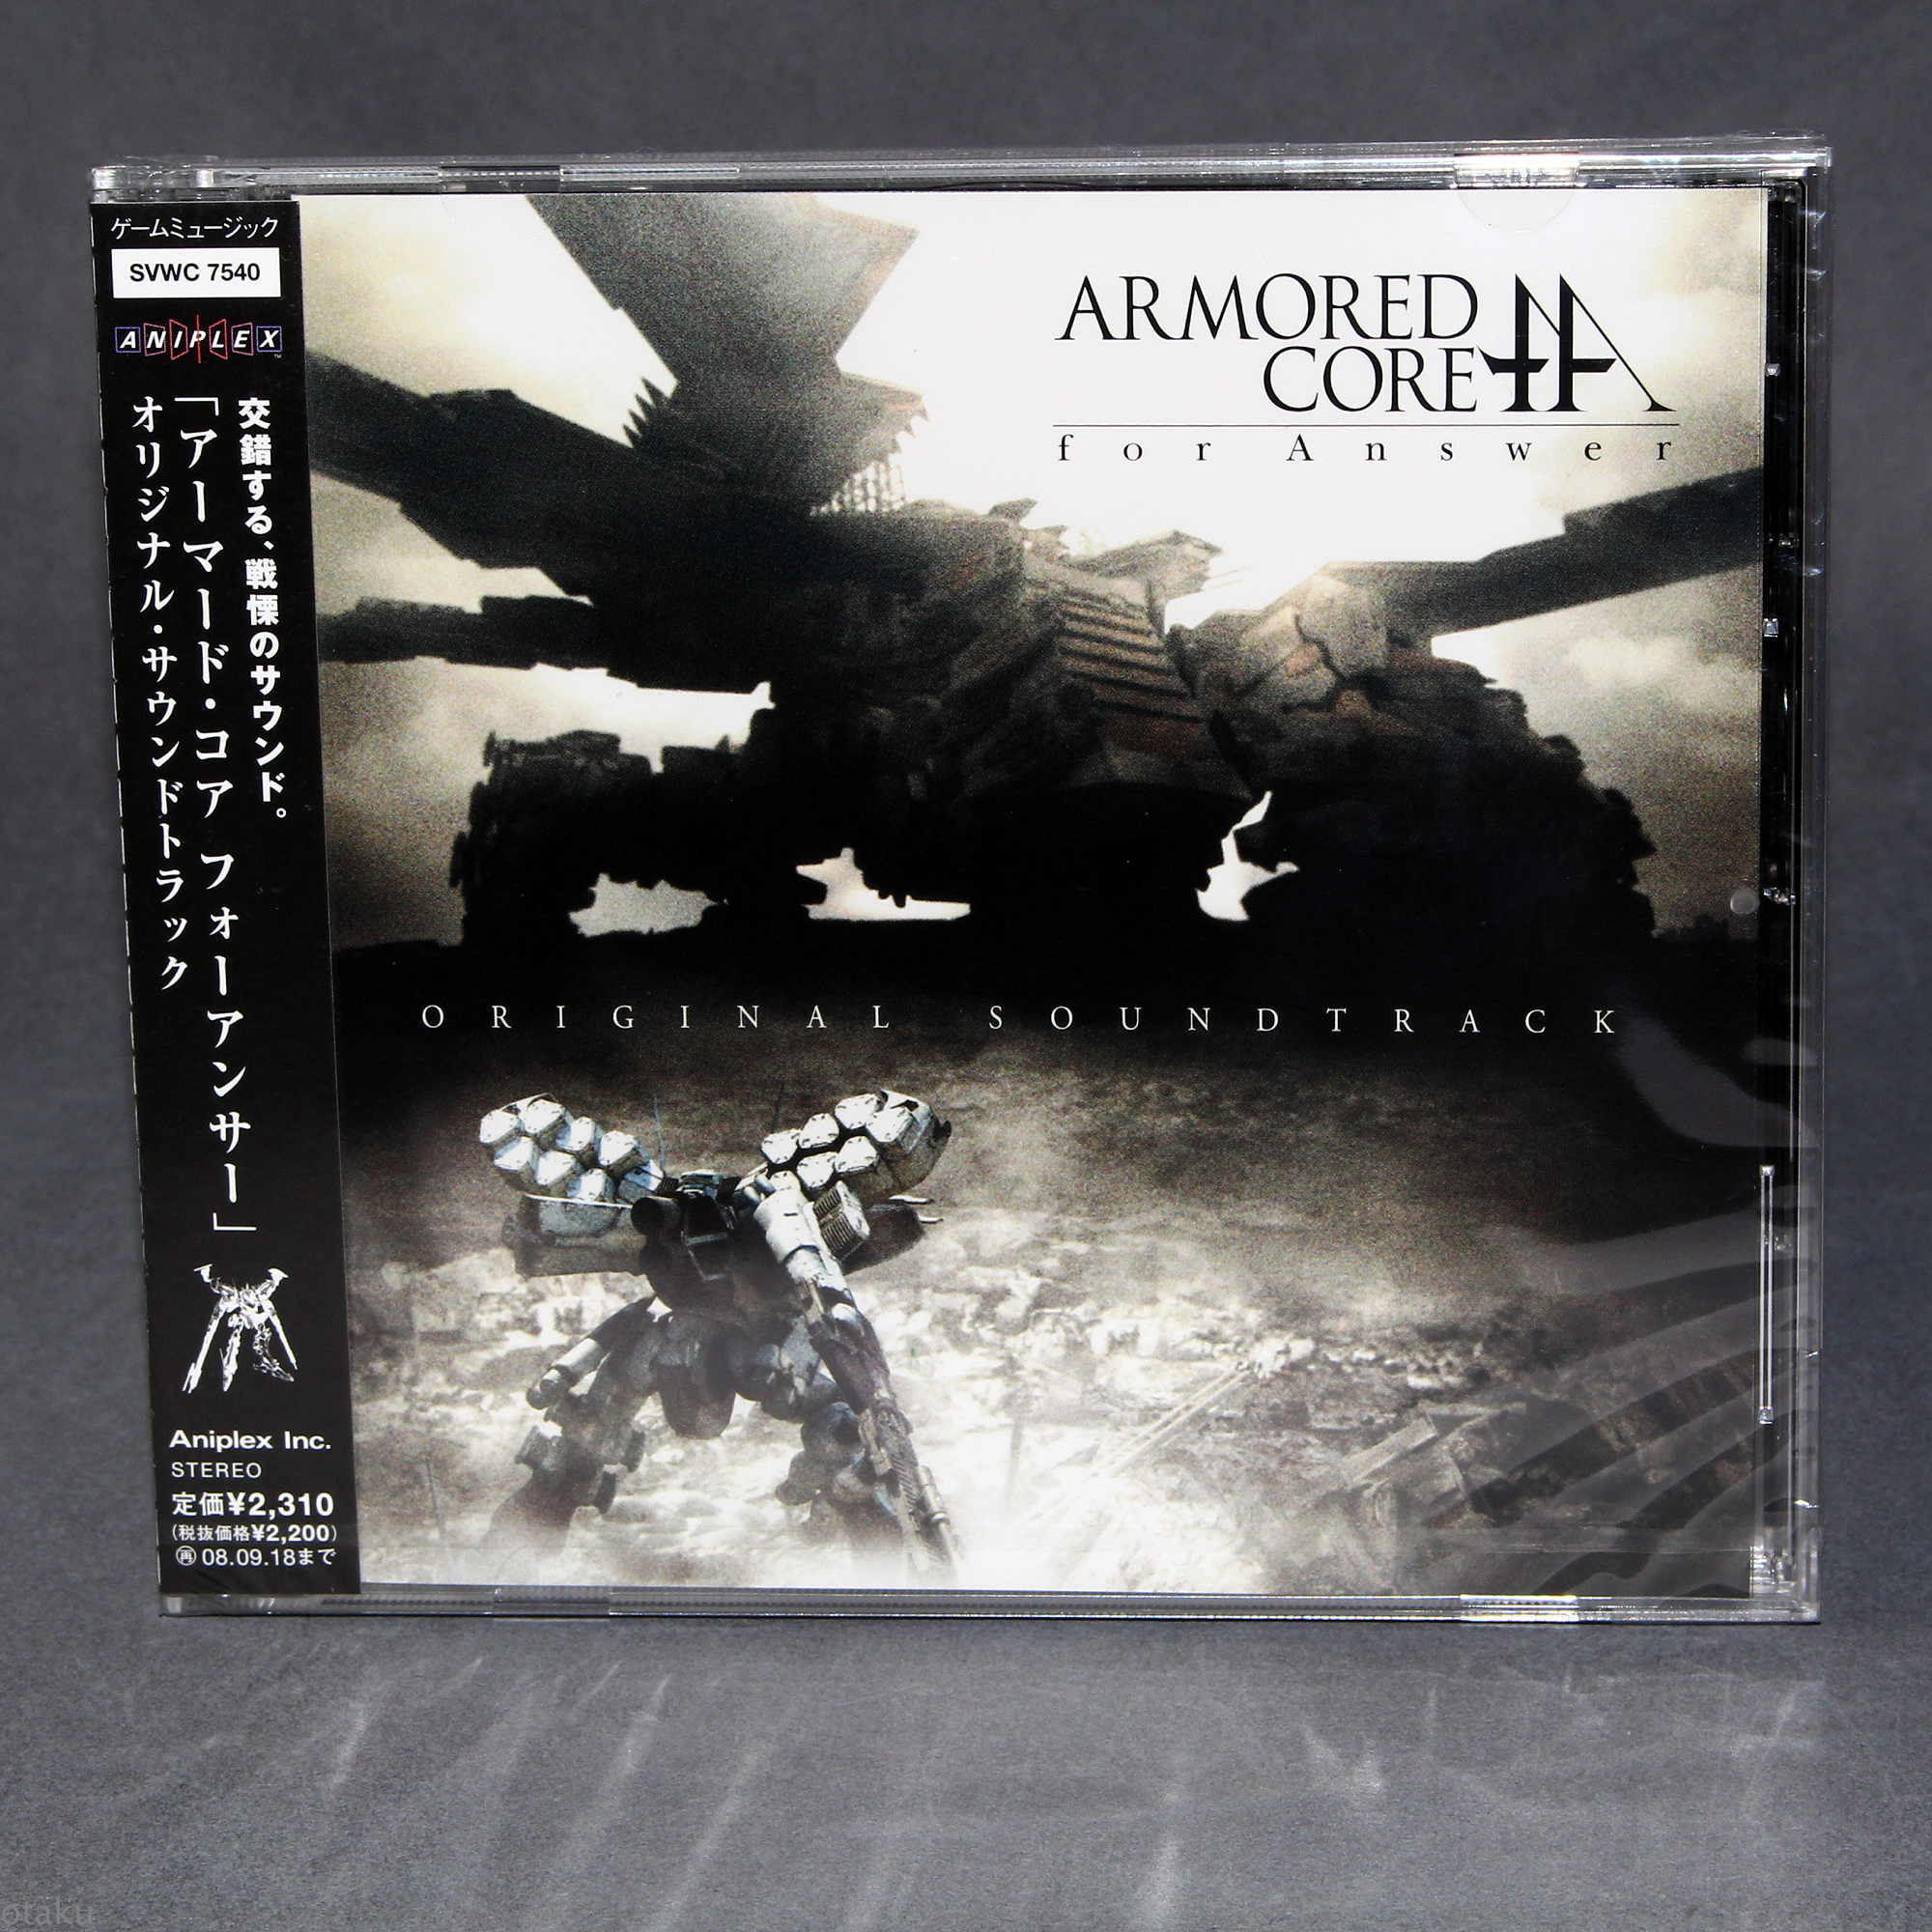 Stream Armored Core 4 Original Soundtrack #19 Rain by amonymous